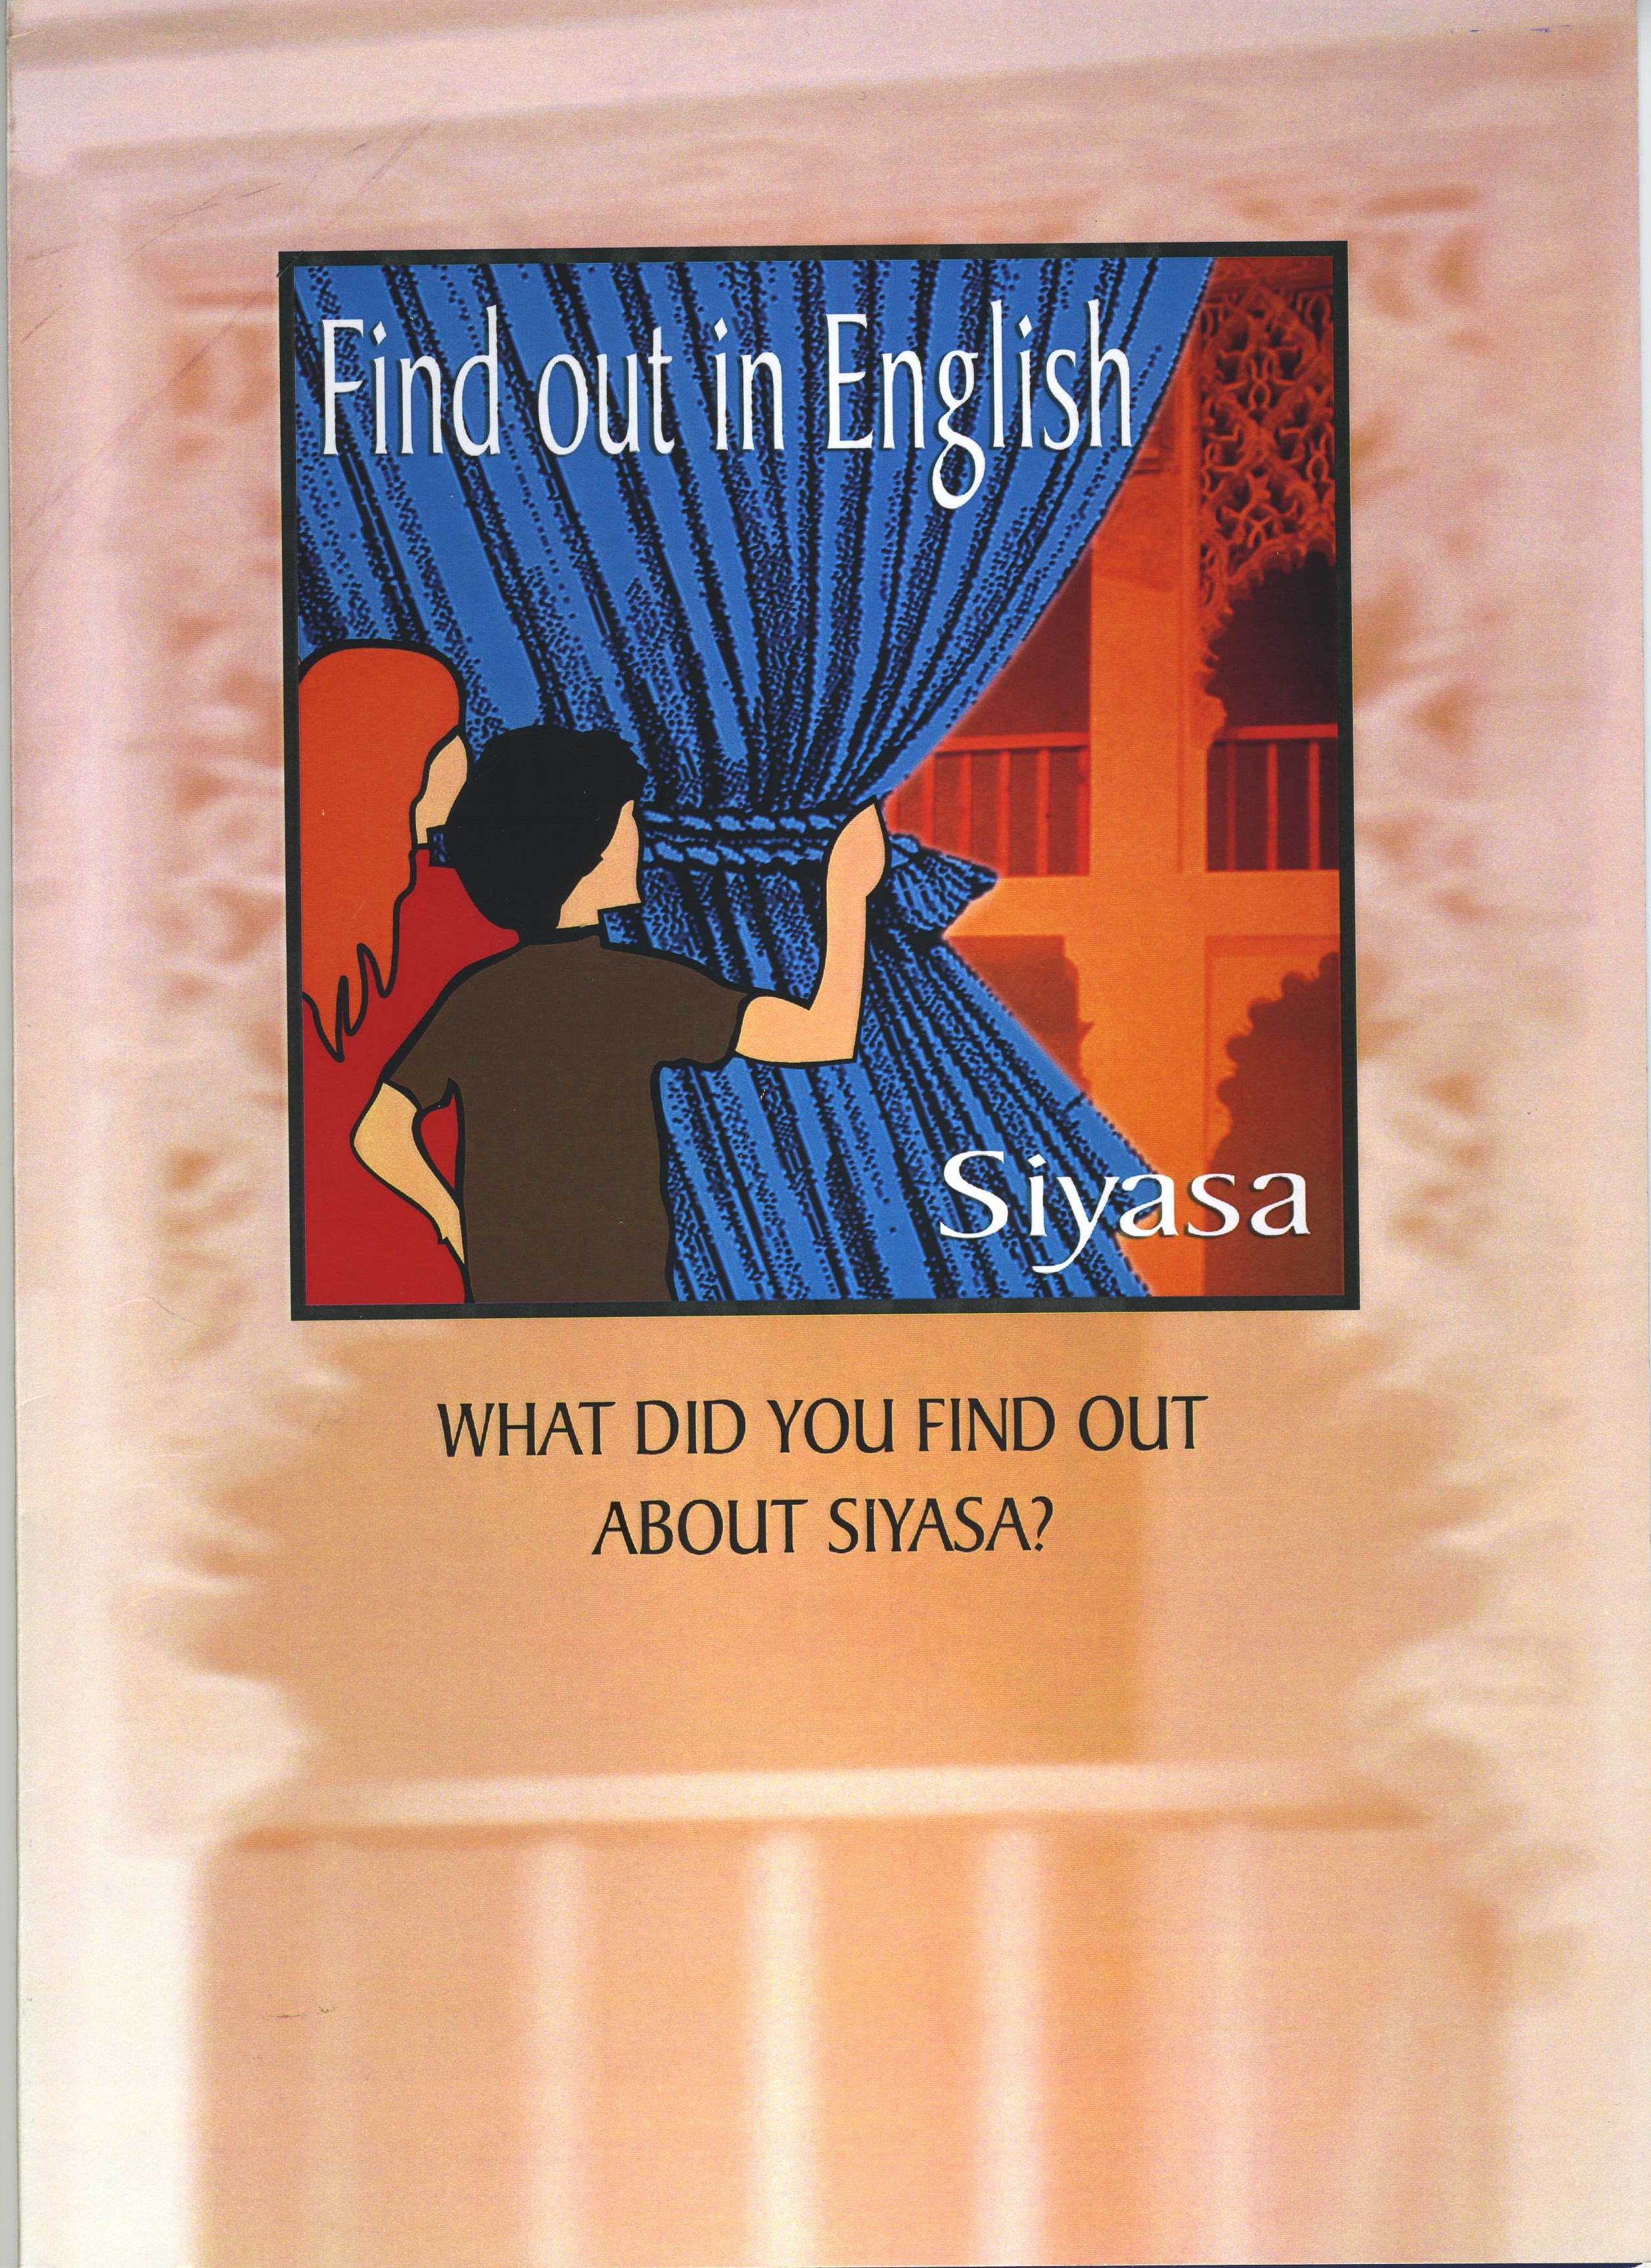 Portada de "Find out in English.'Descubre en inglés'"